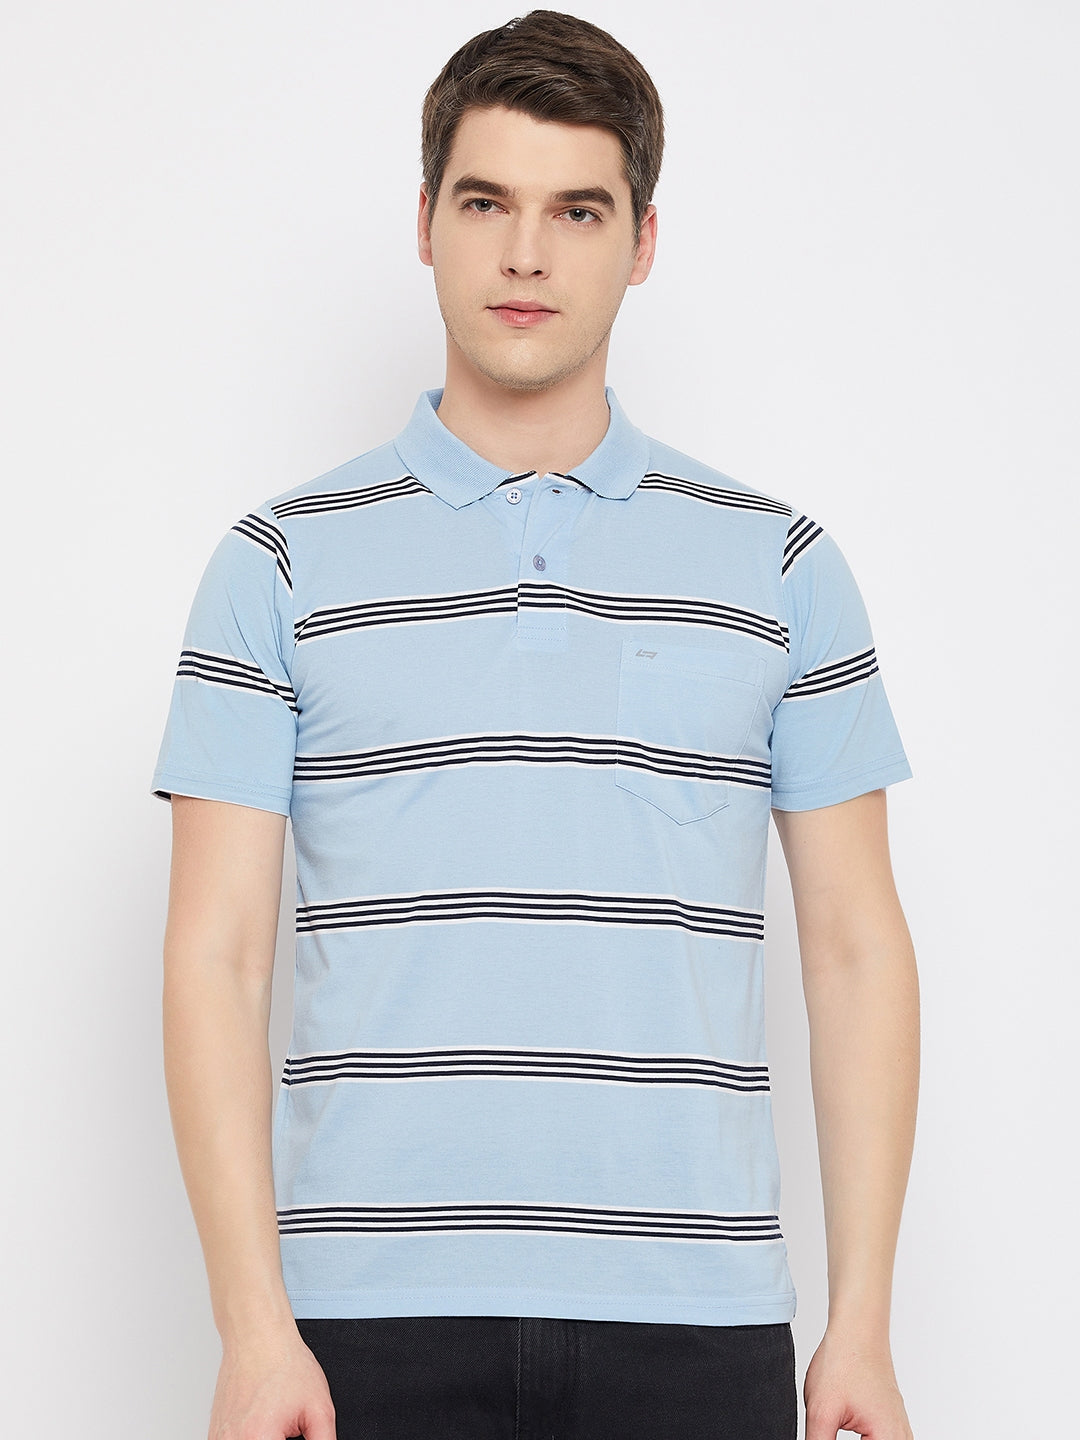 Neva Men's T-Shirt Polo Neck Half Sleeves in Stripes pattern  - Sky